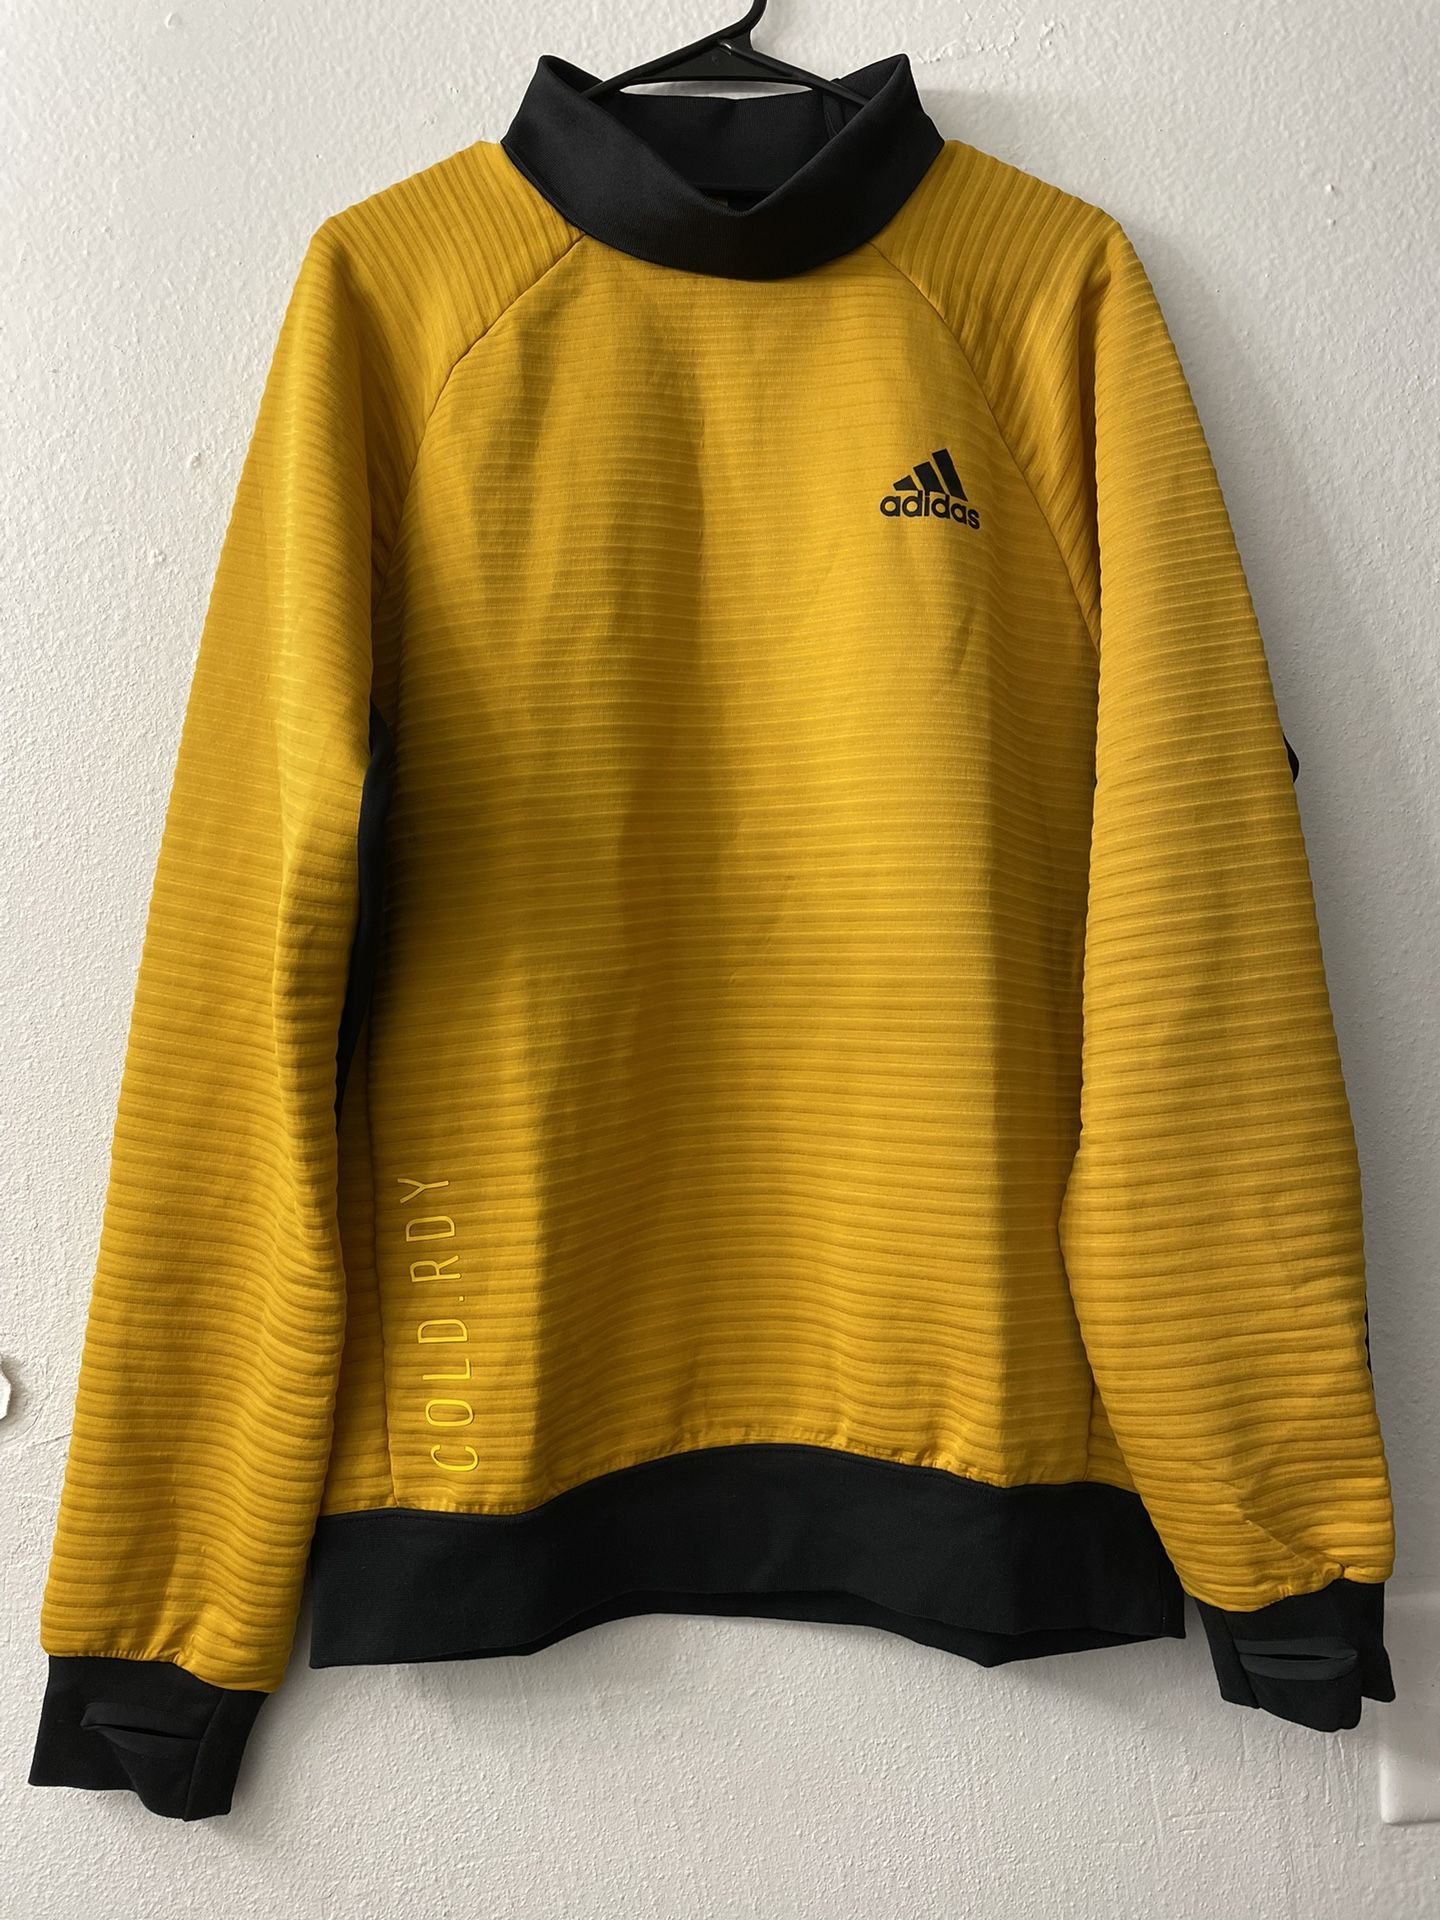 Adidas COLD.RDY Crewneck Sweater Size Medium 